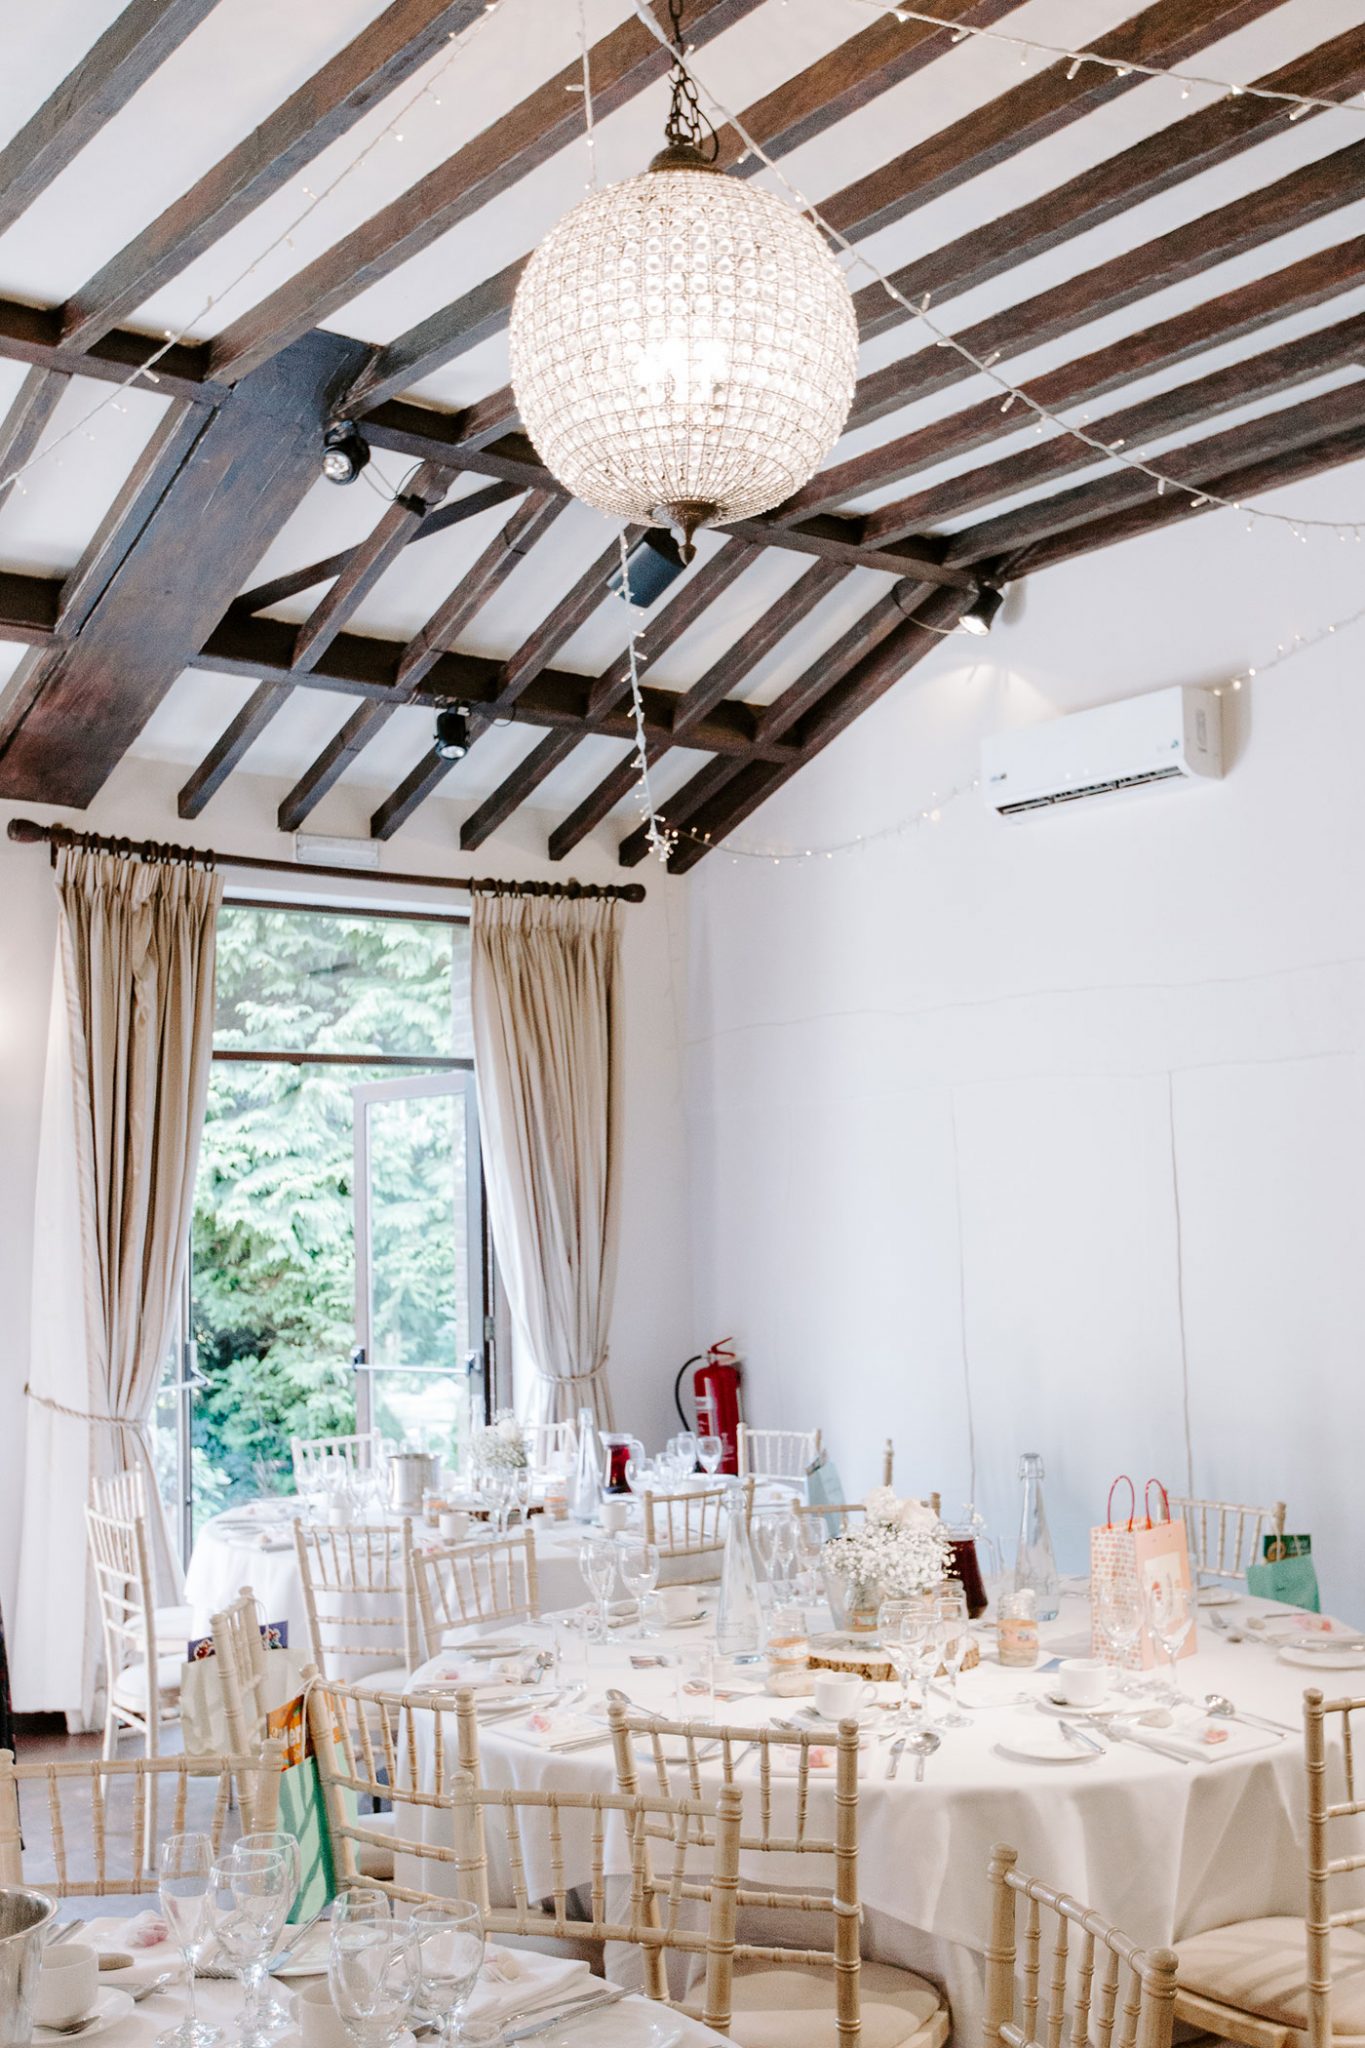 Woodhall Manor Wedding Venue